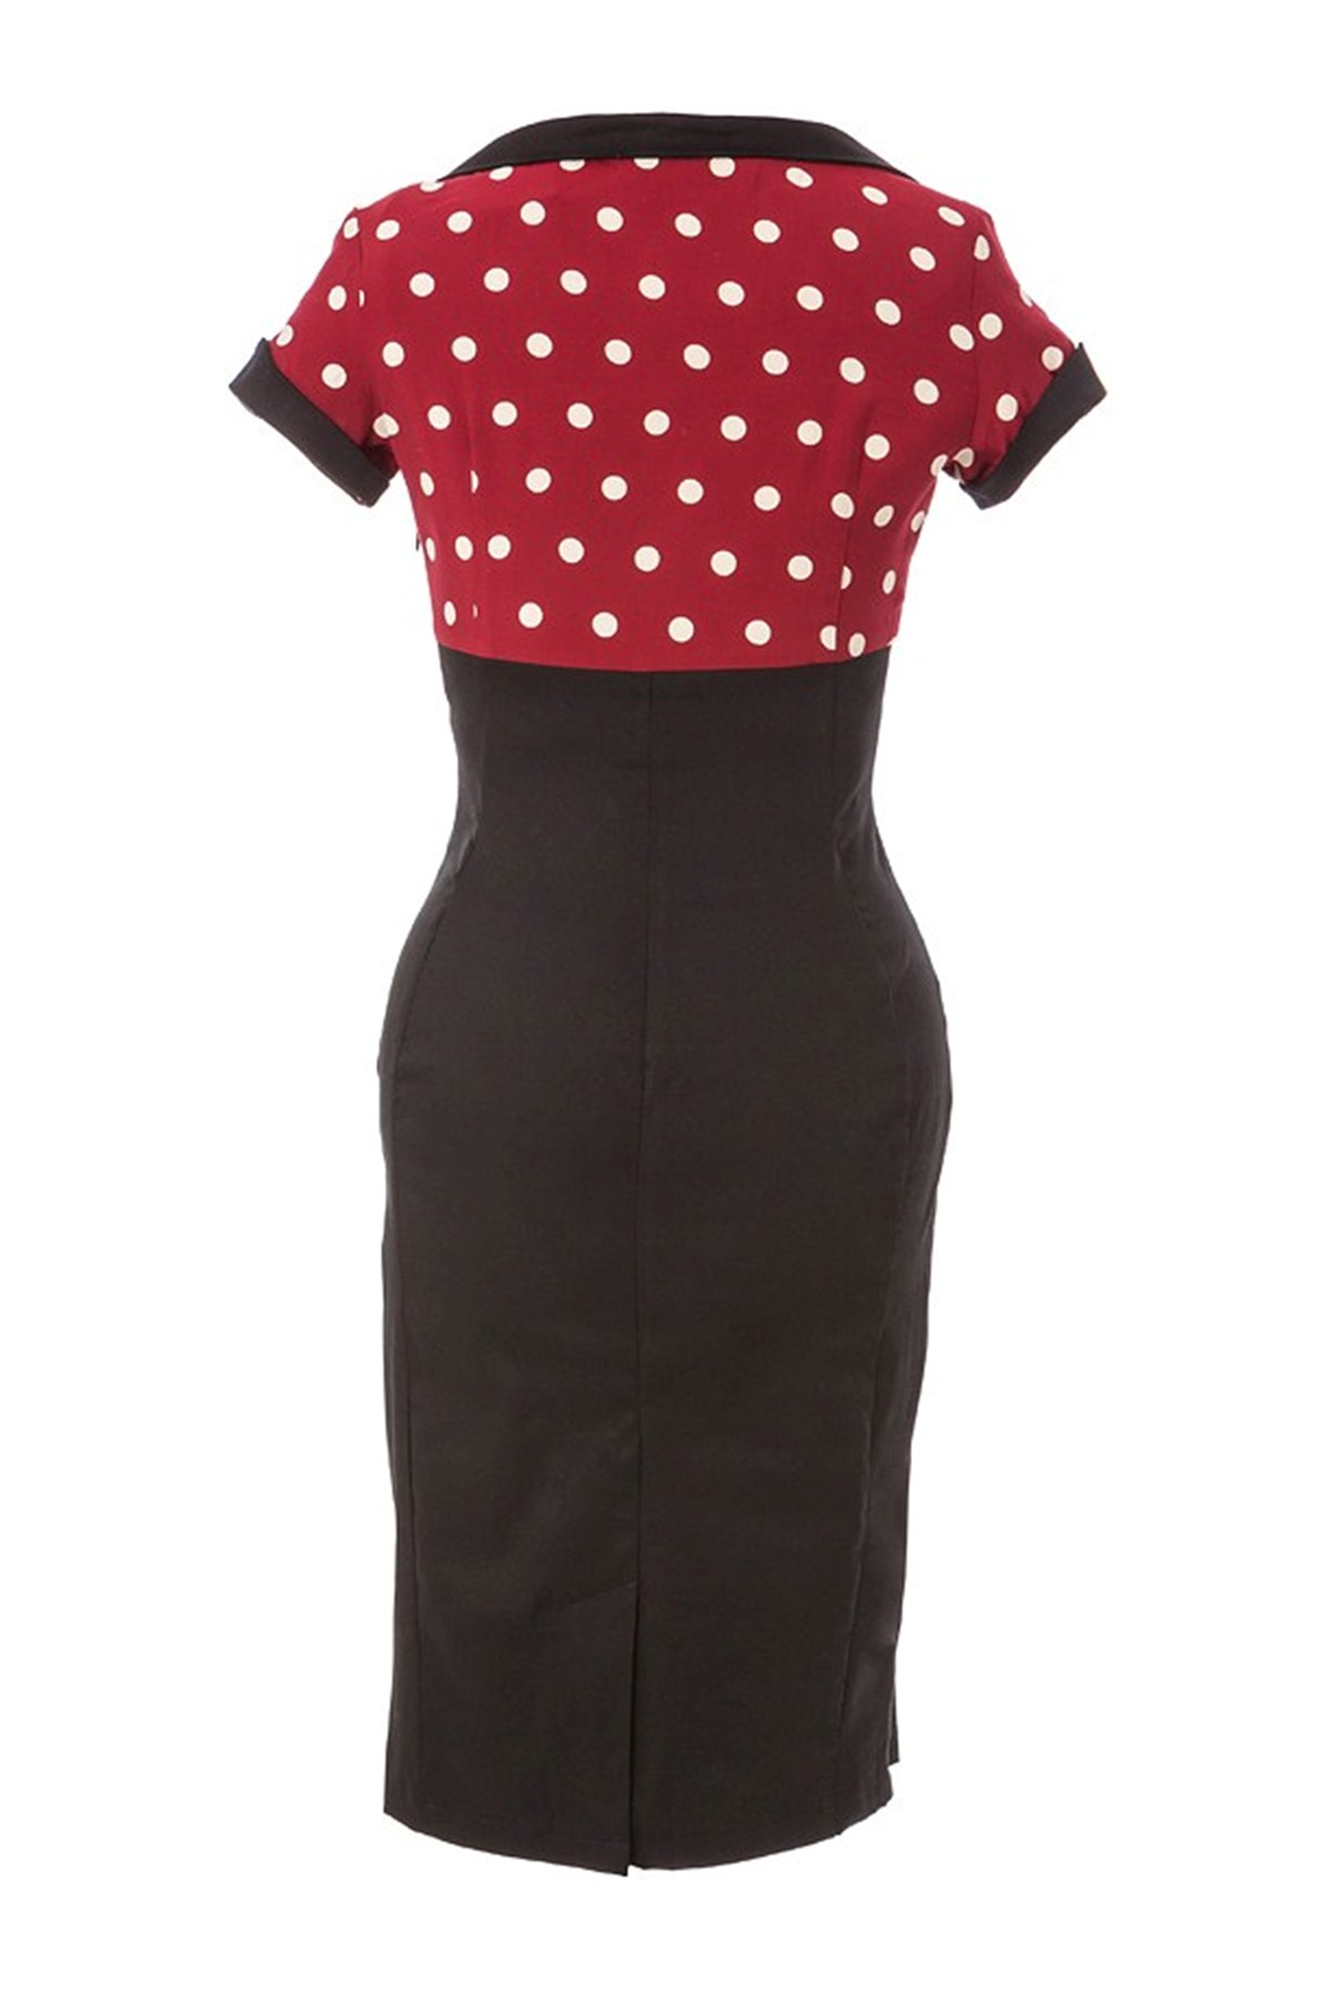 New Vintage Chic 1950's Style Polka Dot Black Pencil Wiggle Dress Size ...